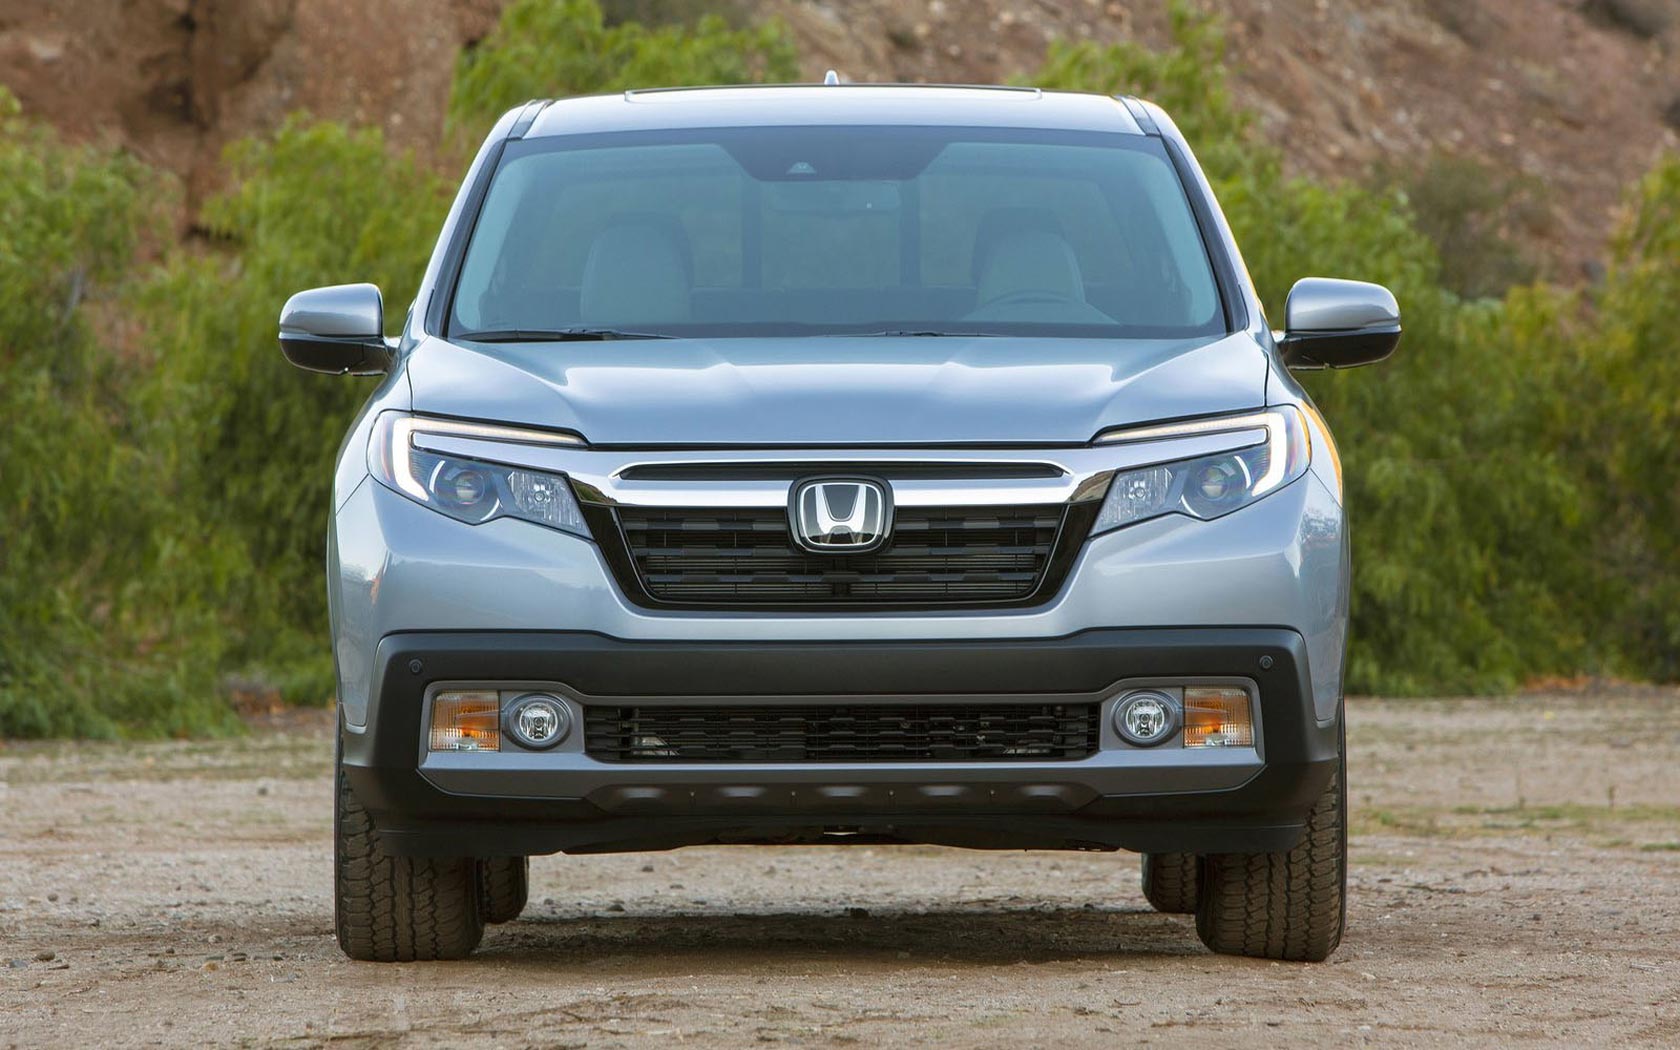  Honda Ridgeline (2016-2020)